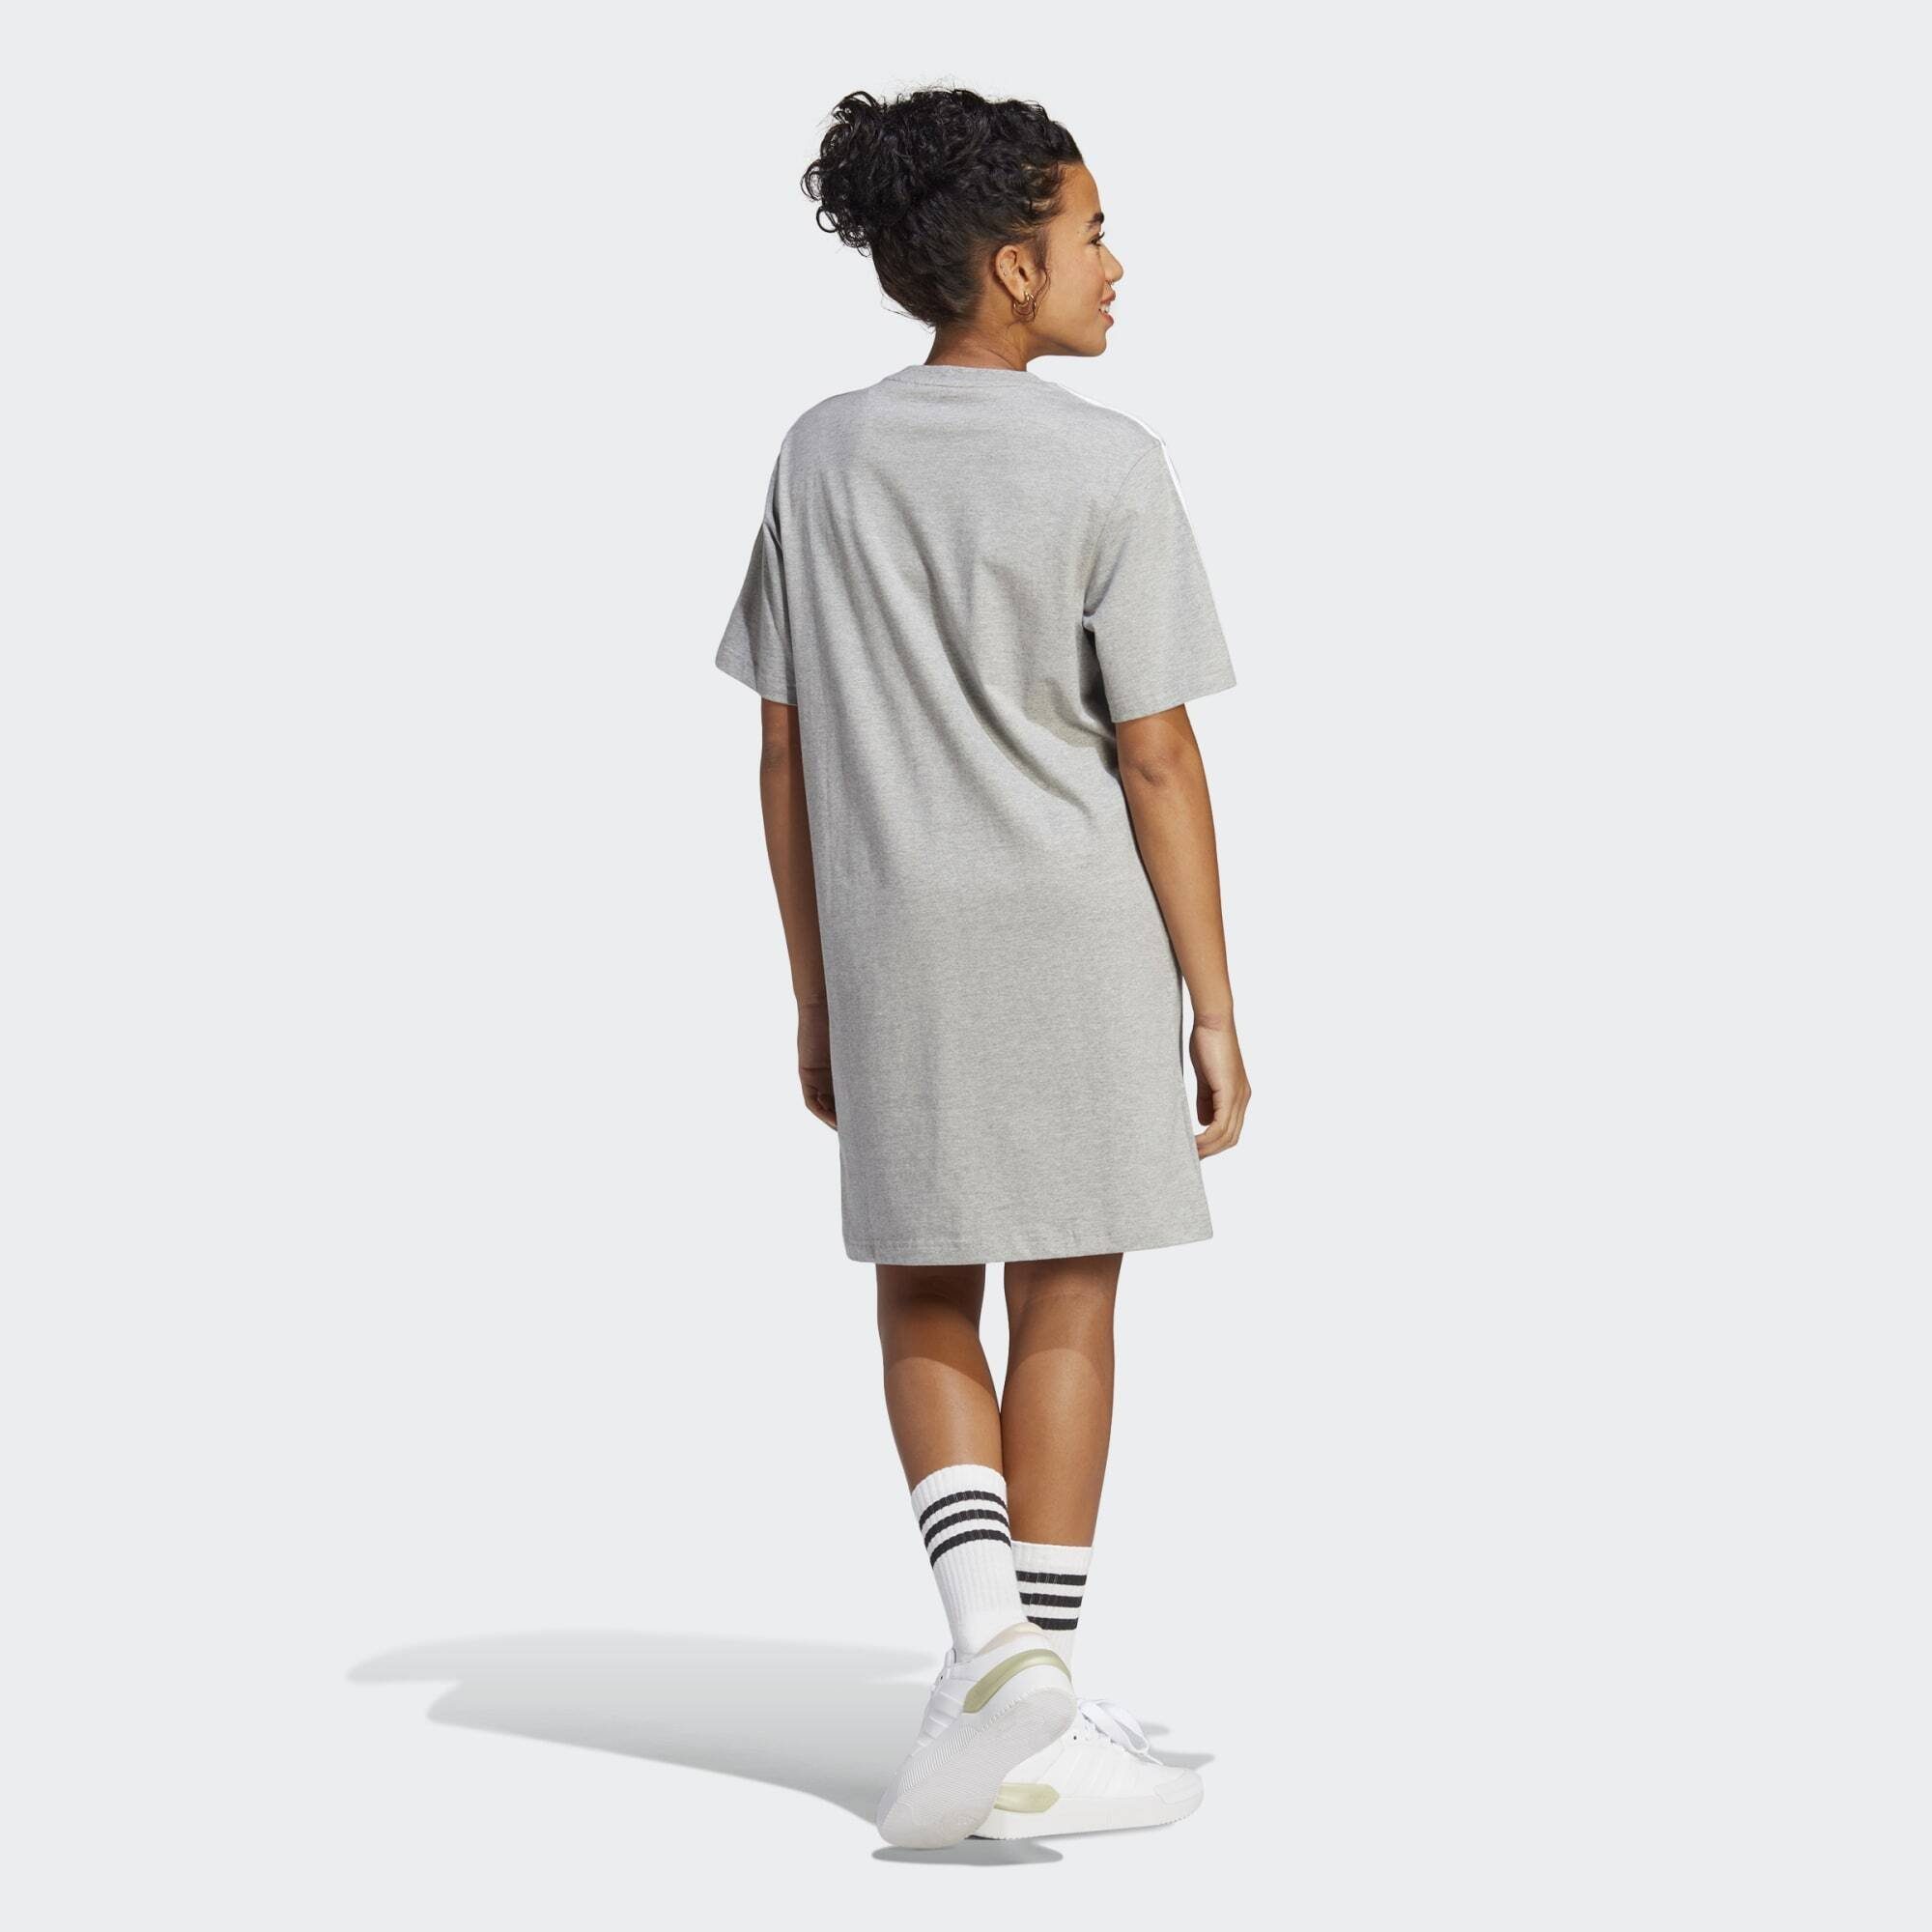 White Midikleid / Heather adidas Medium Grey Sportswear